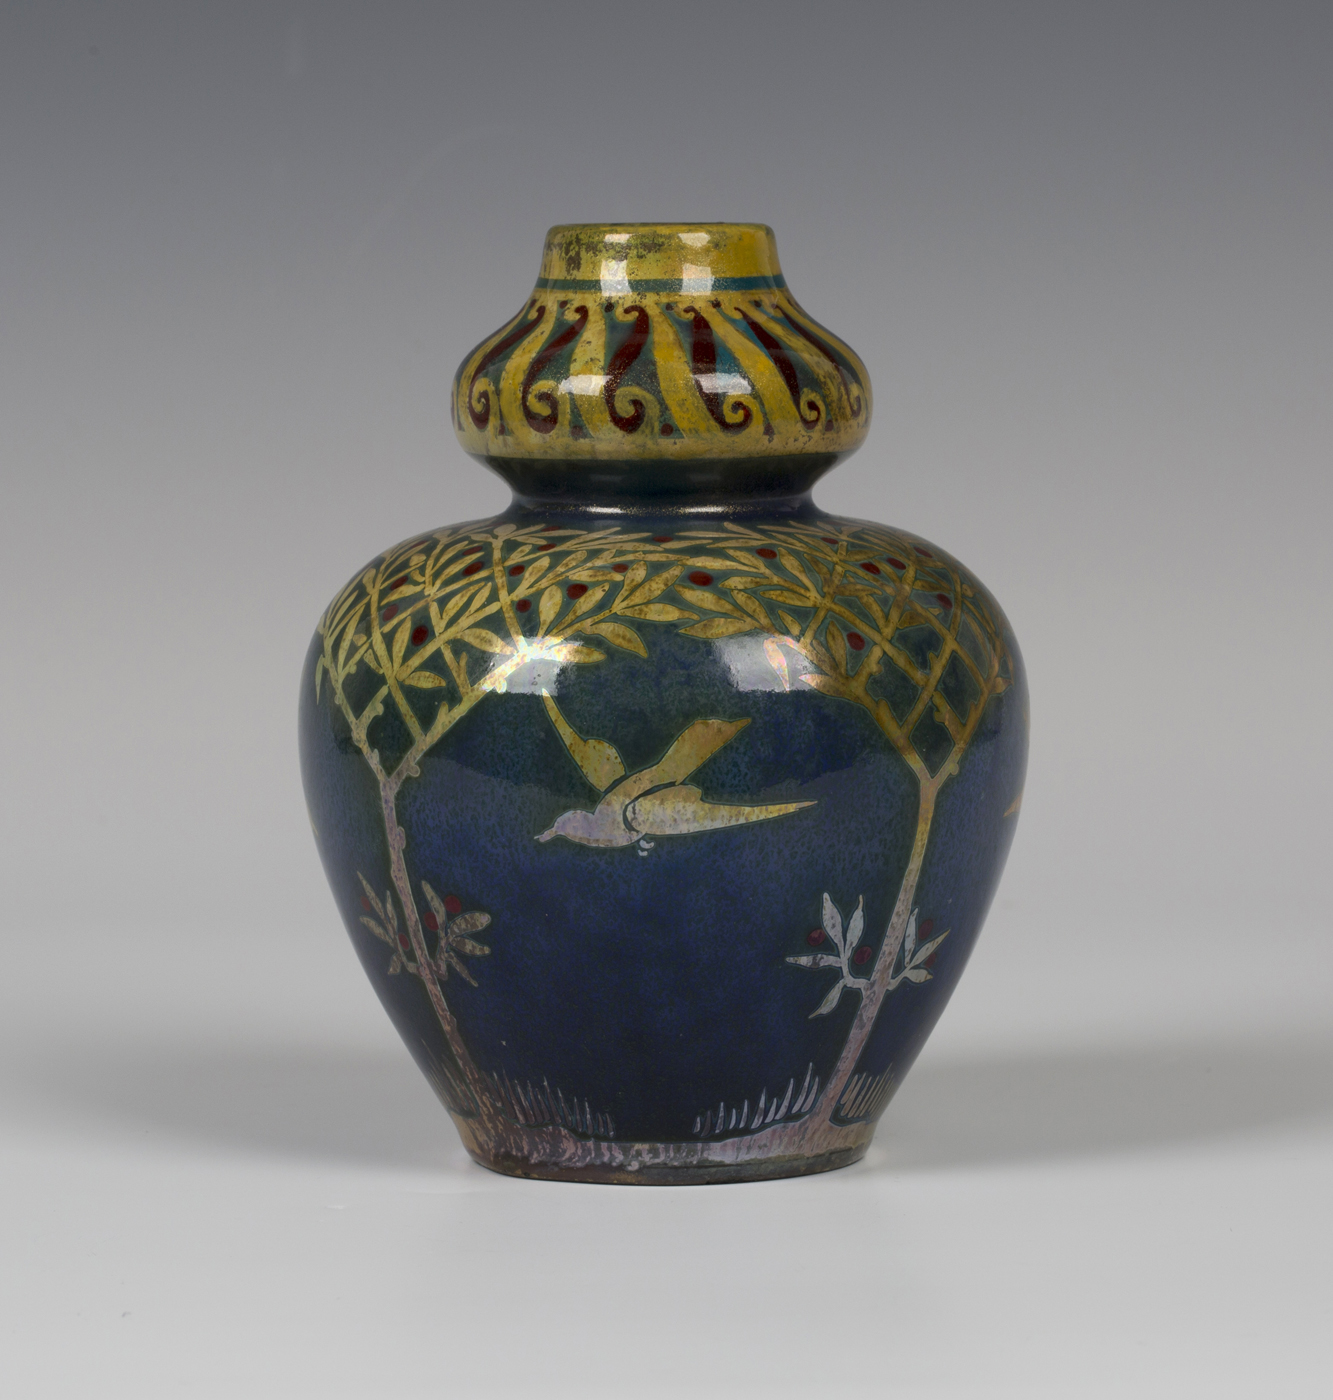 A Pilkington's Royal Lancastrian lustre vase, circa 1911, by William S. Mycock, monogrammed, the